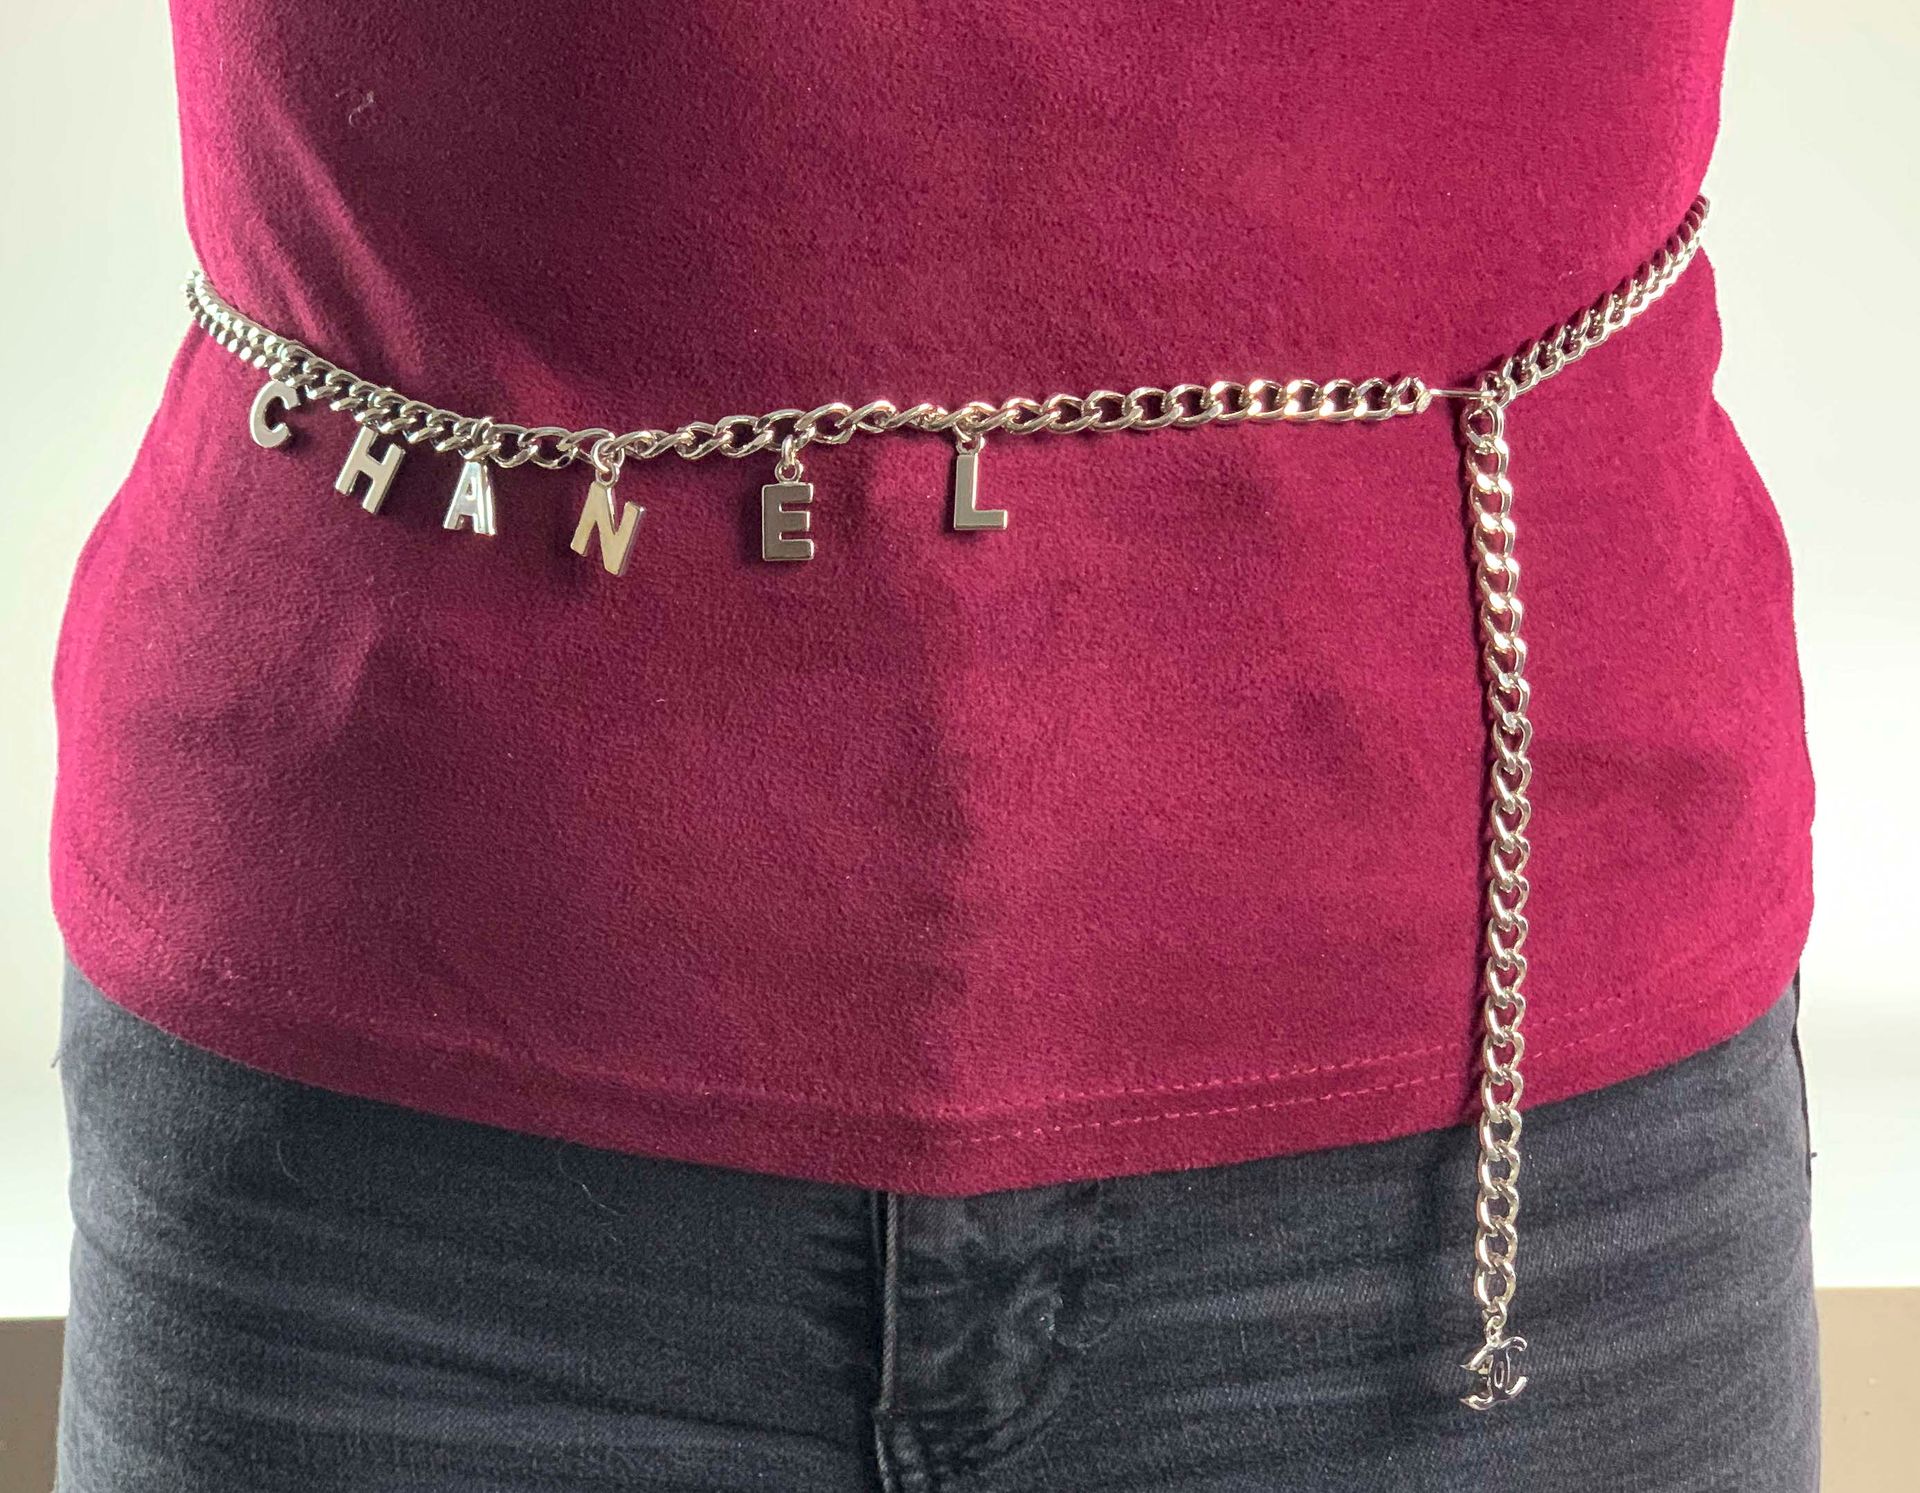 Null 香奈儿。约2007年 - 镀银金属腰带或链条项链，吊坠为构成香奈儿品牌名称的字母。长：93厘米